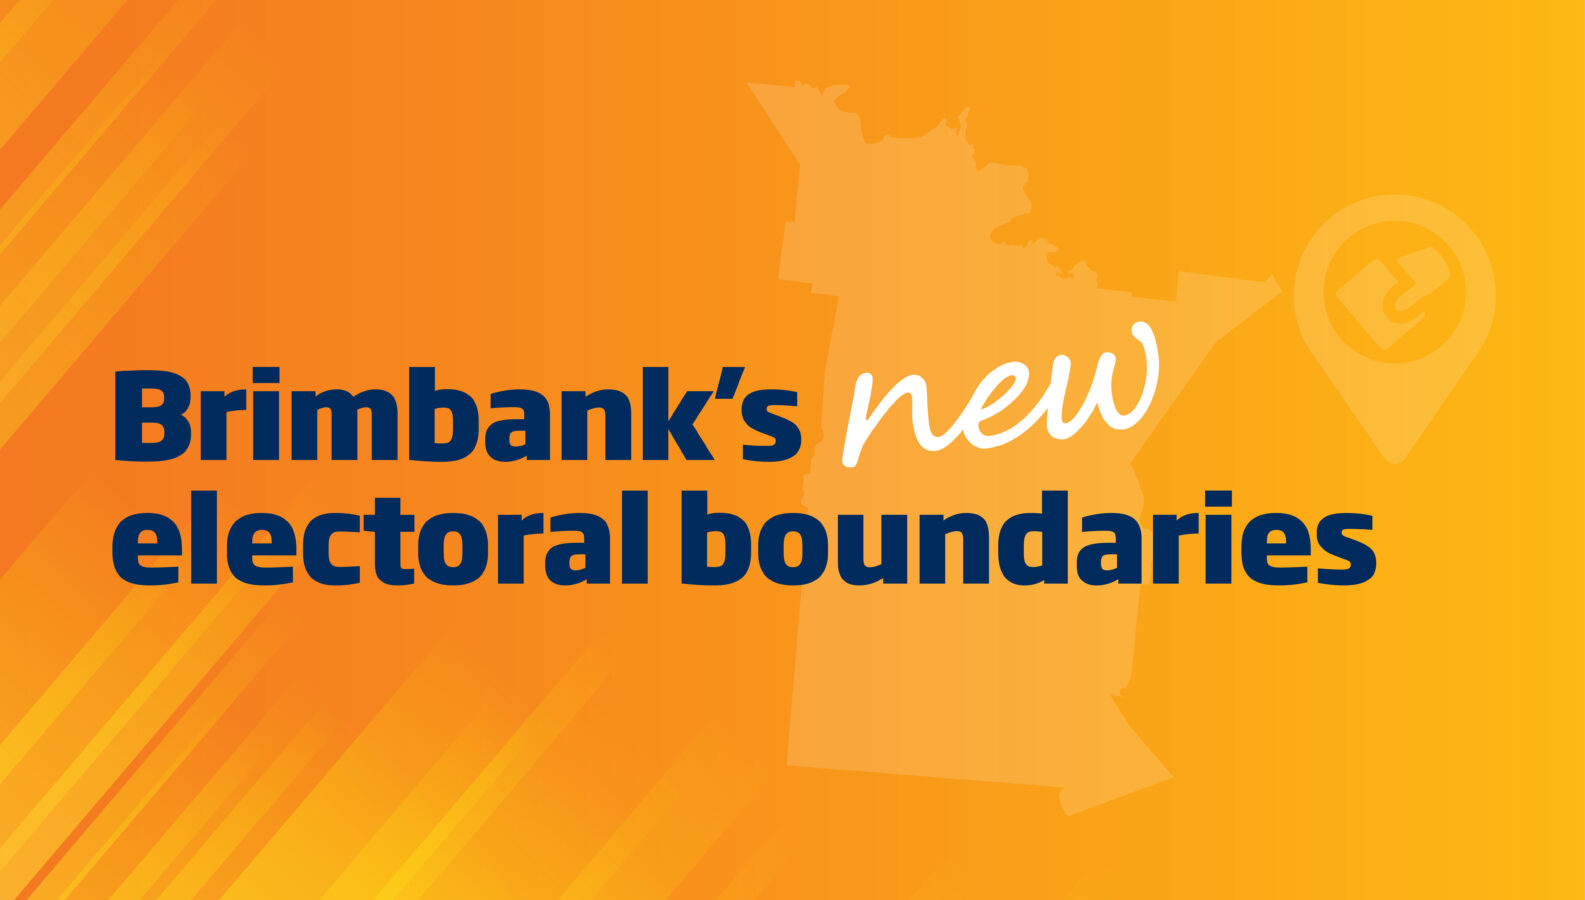 Brimbank;s new electoral boundaries